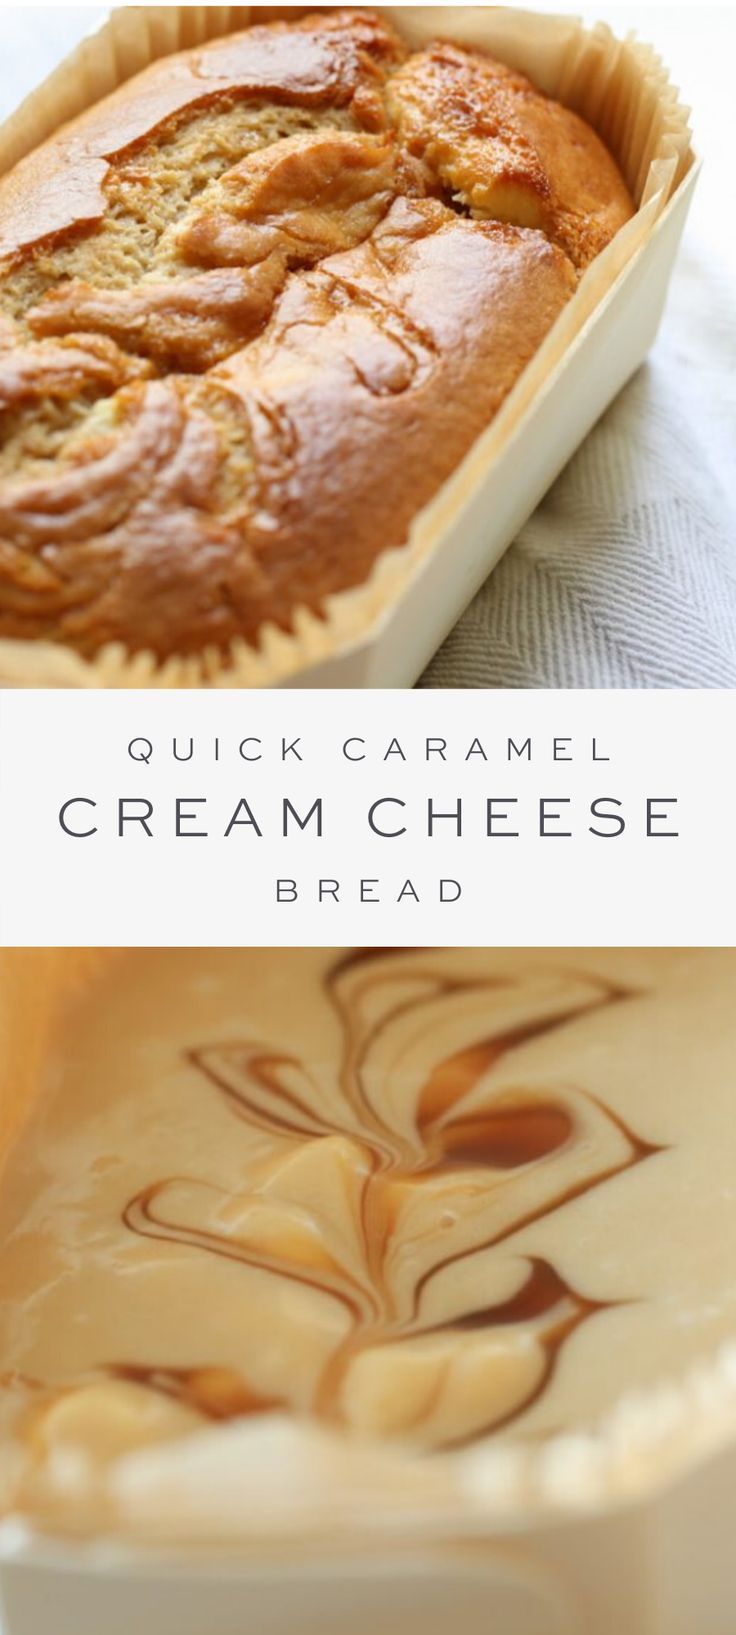 17 desserts Caramel cream cheeses ideas